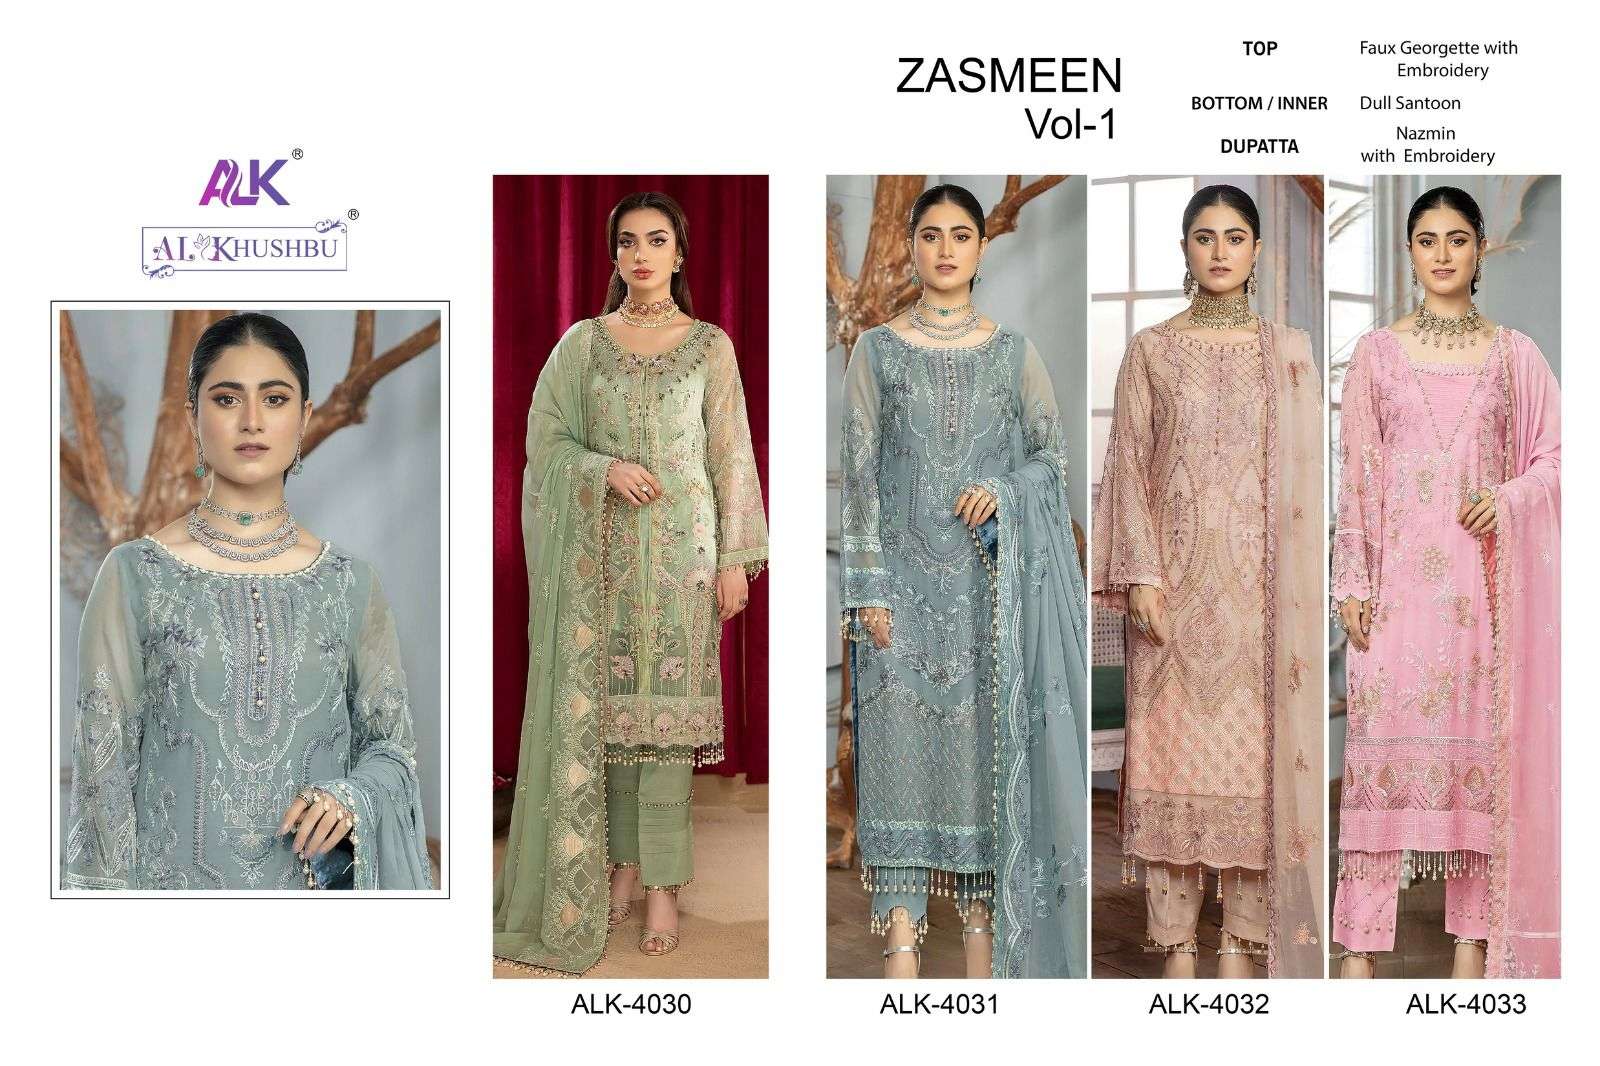 al khushbu zasmeen vol-1 4033 series stylish designer pakistani salwar suits manufacturer surat 